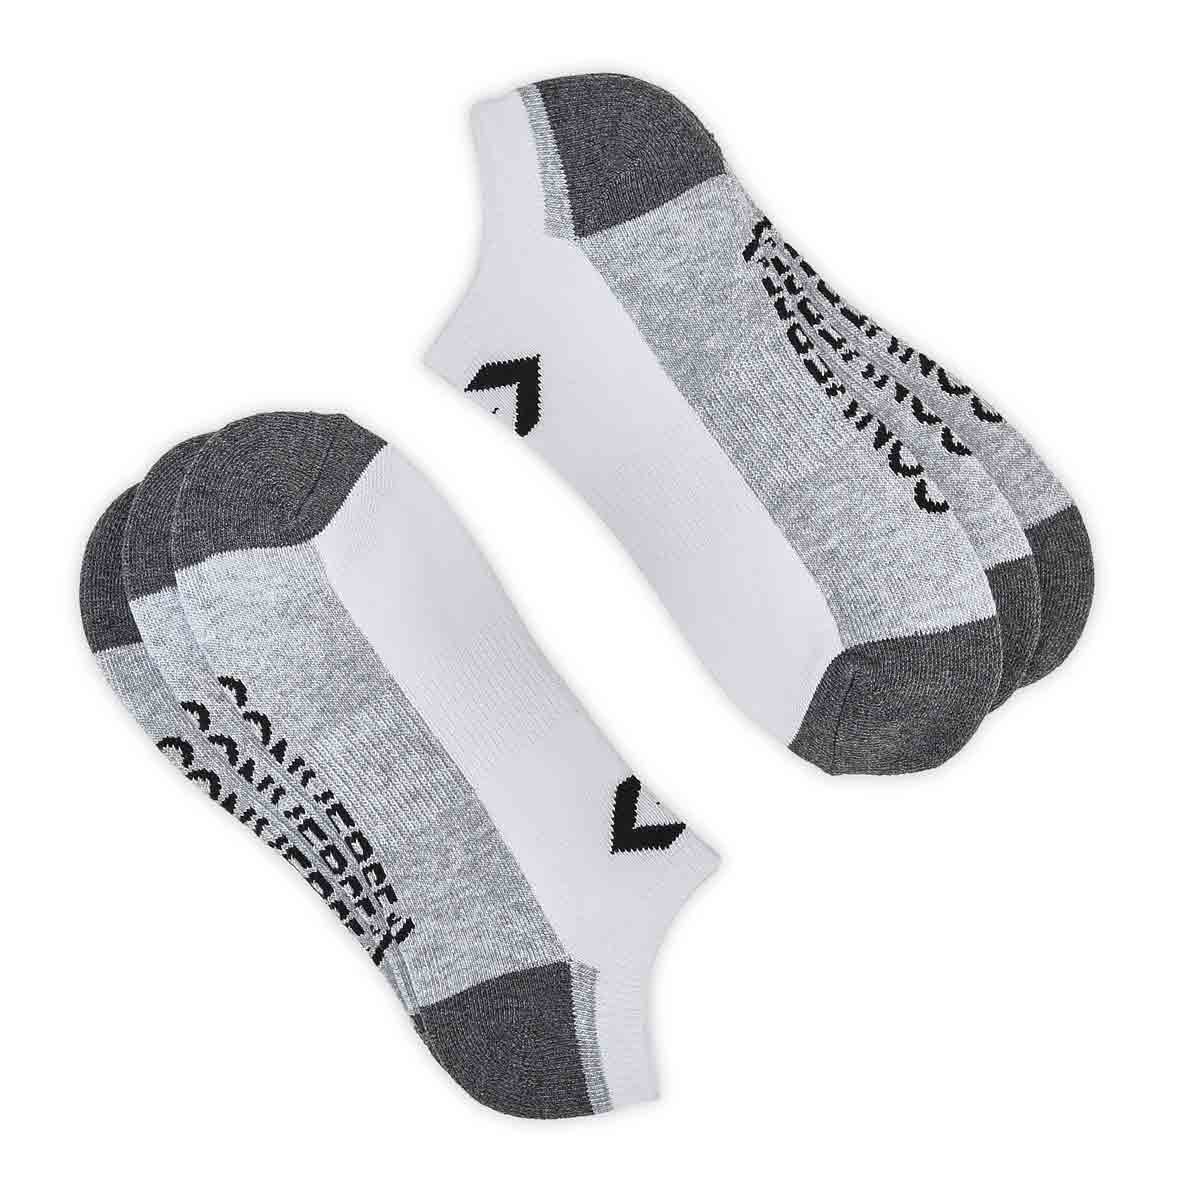 Socquettes invisibles HALF CUSHION, femme-3 paires